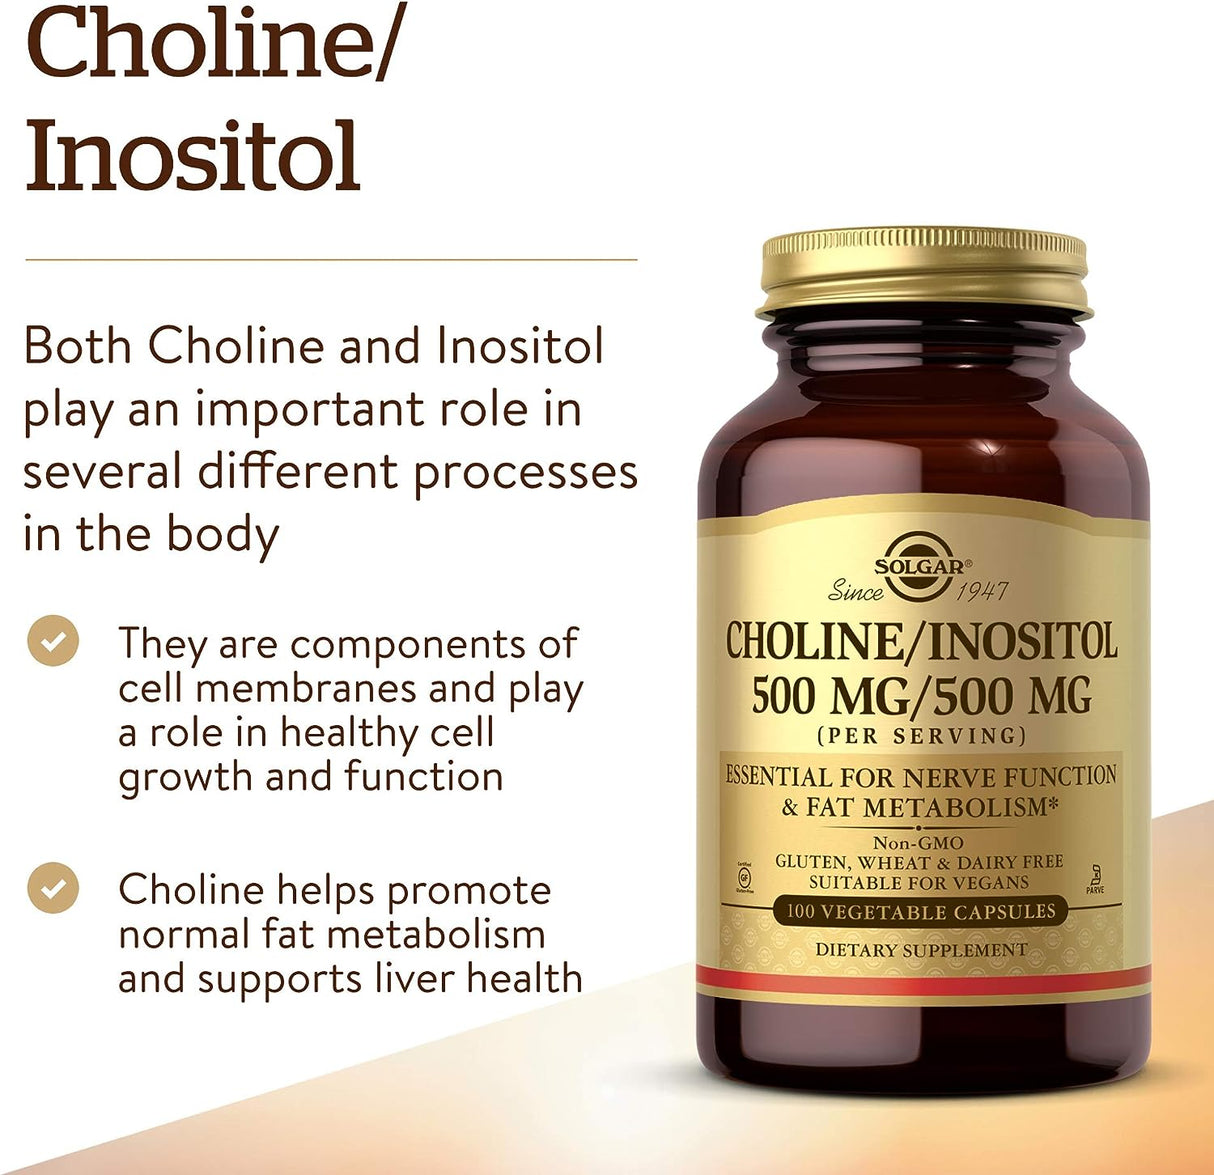 Solgar Choline/Inositol 500Mg./500Mg. 100 Capsulas